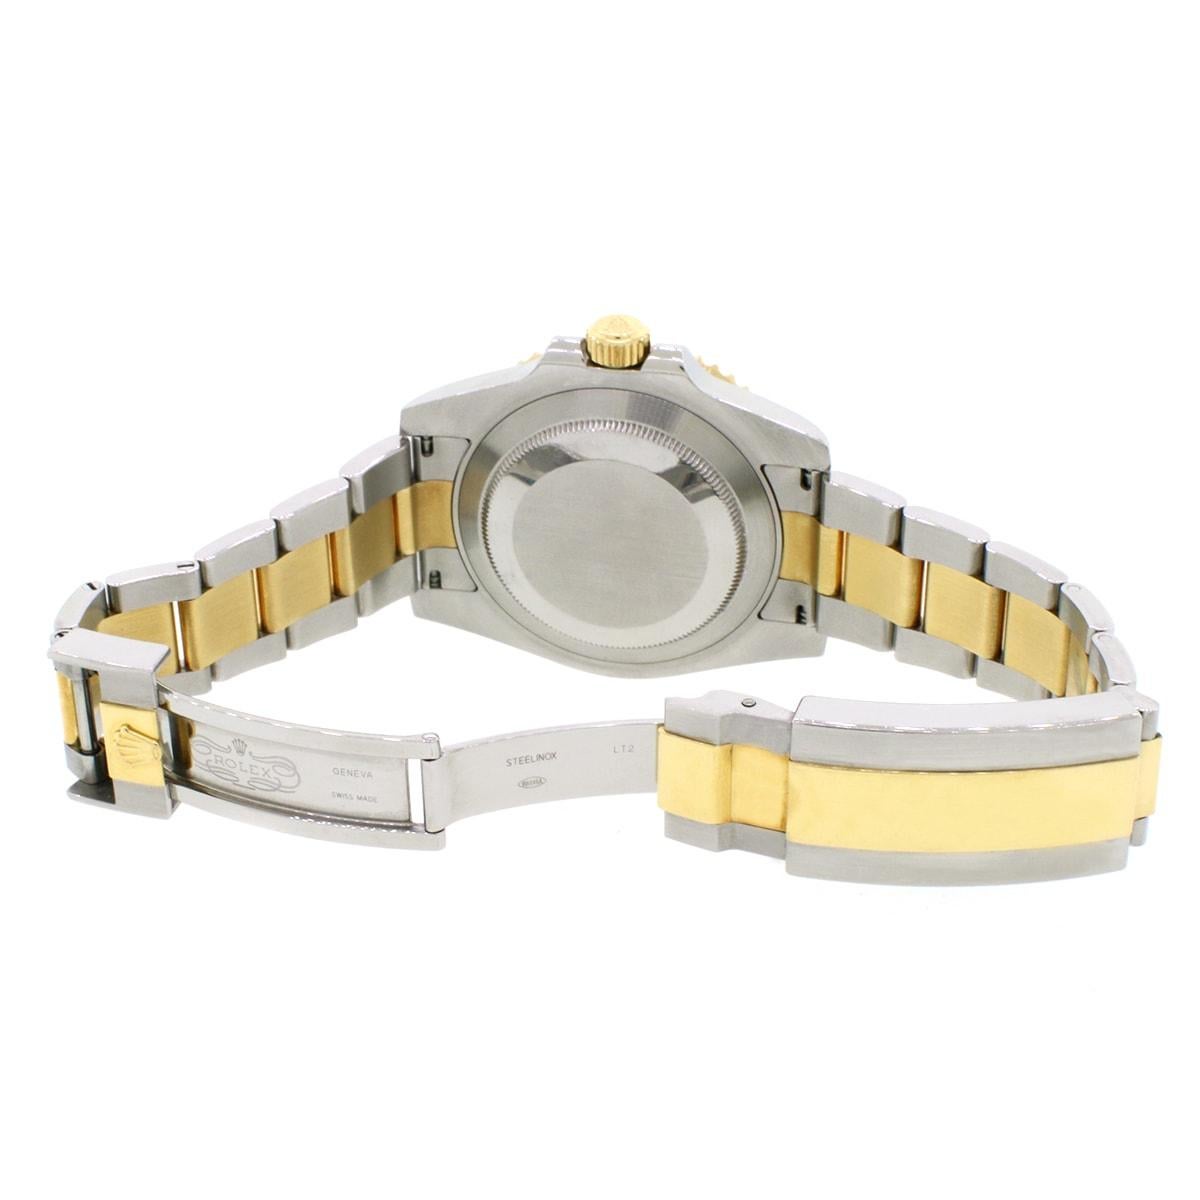 Rolex Submariner Gold/Steel Ceramic Bezel Black Dial Watch 116613 For Sale 2